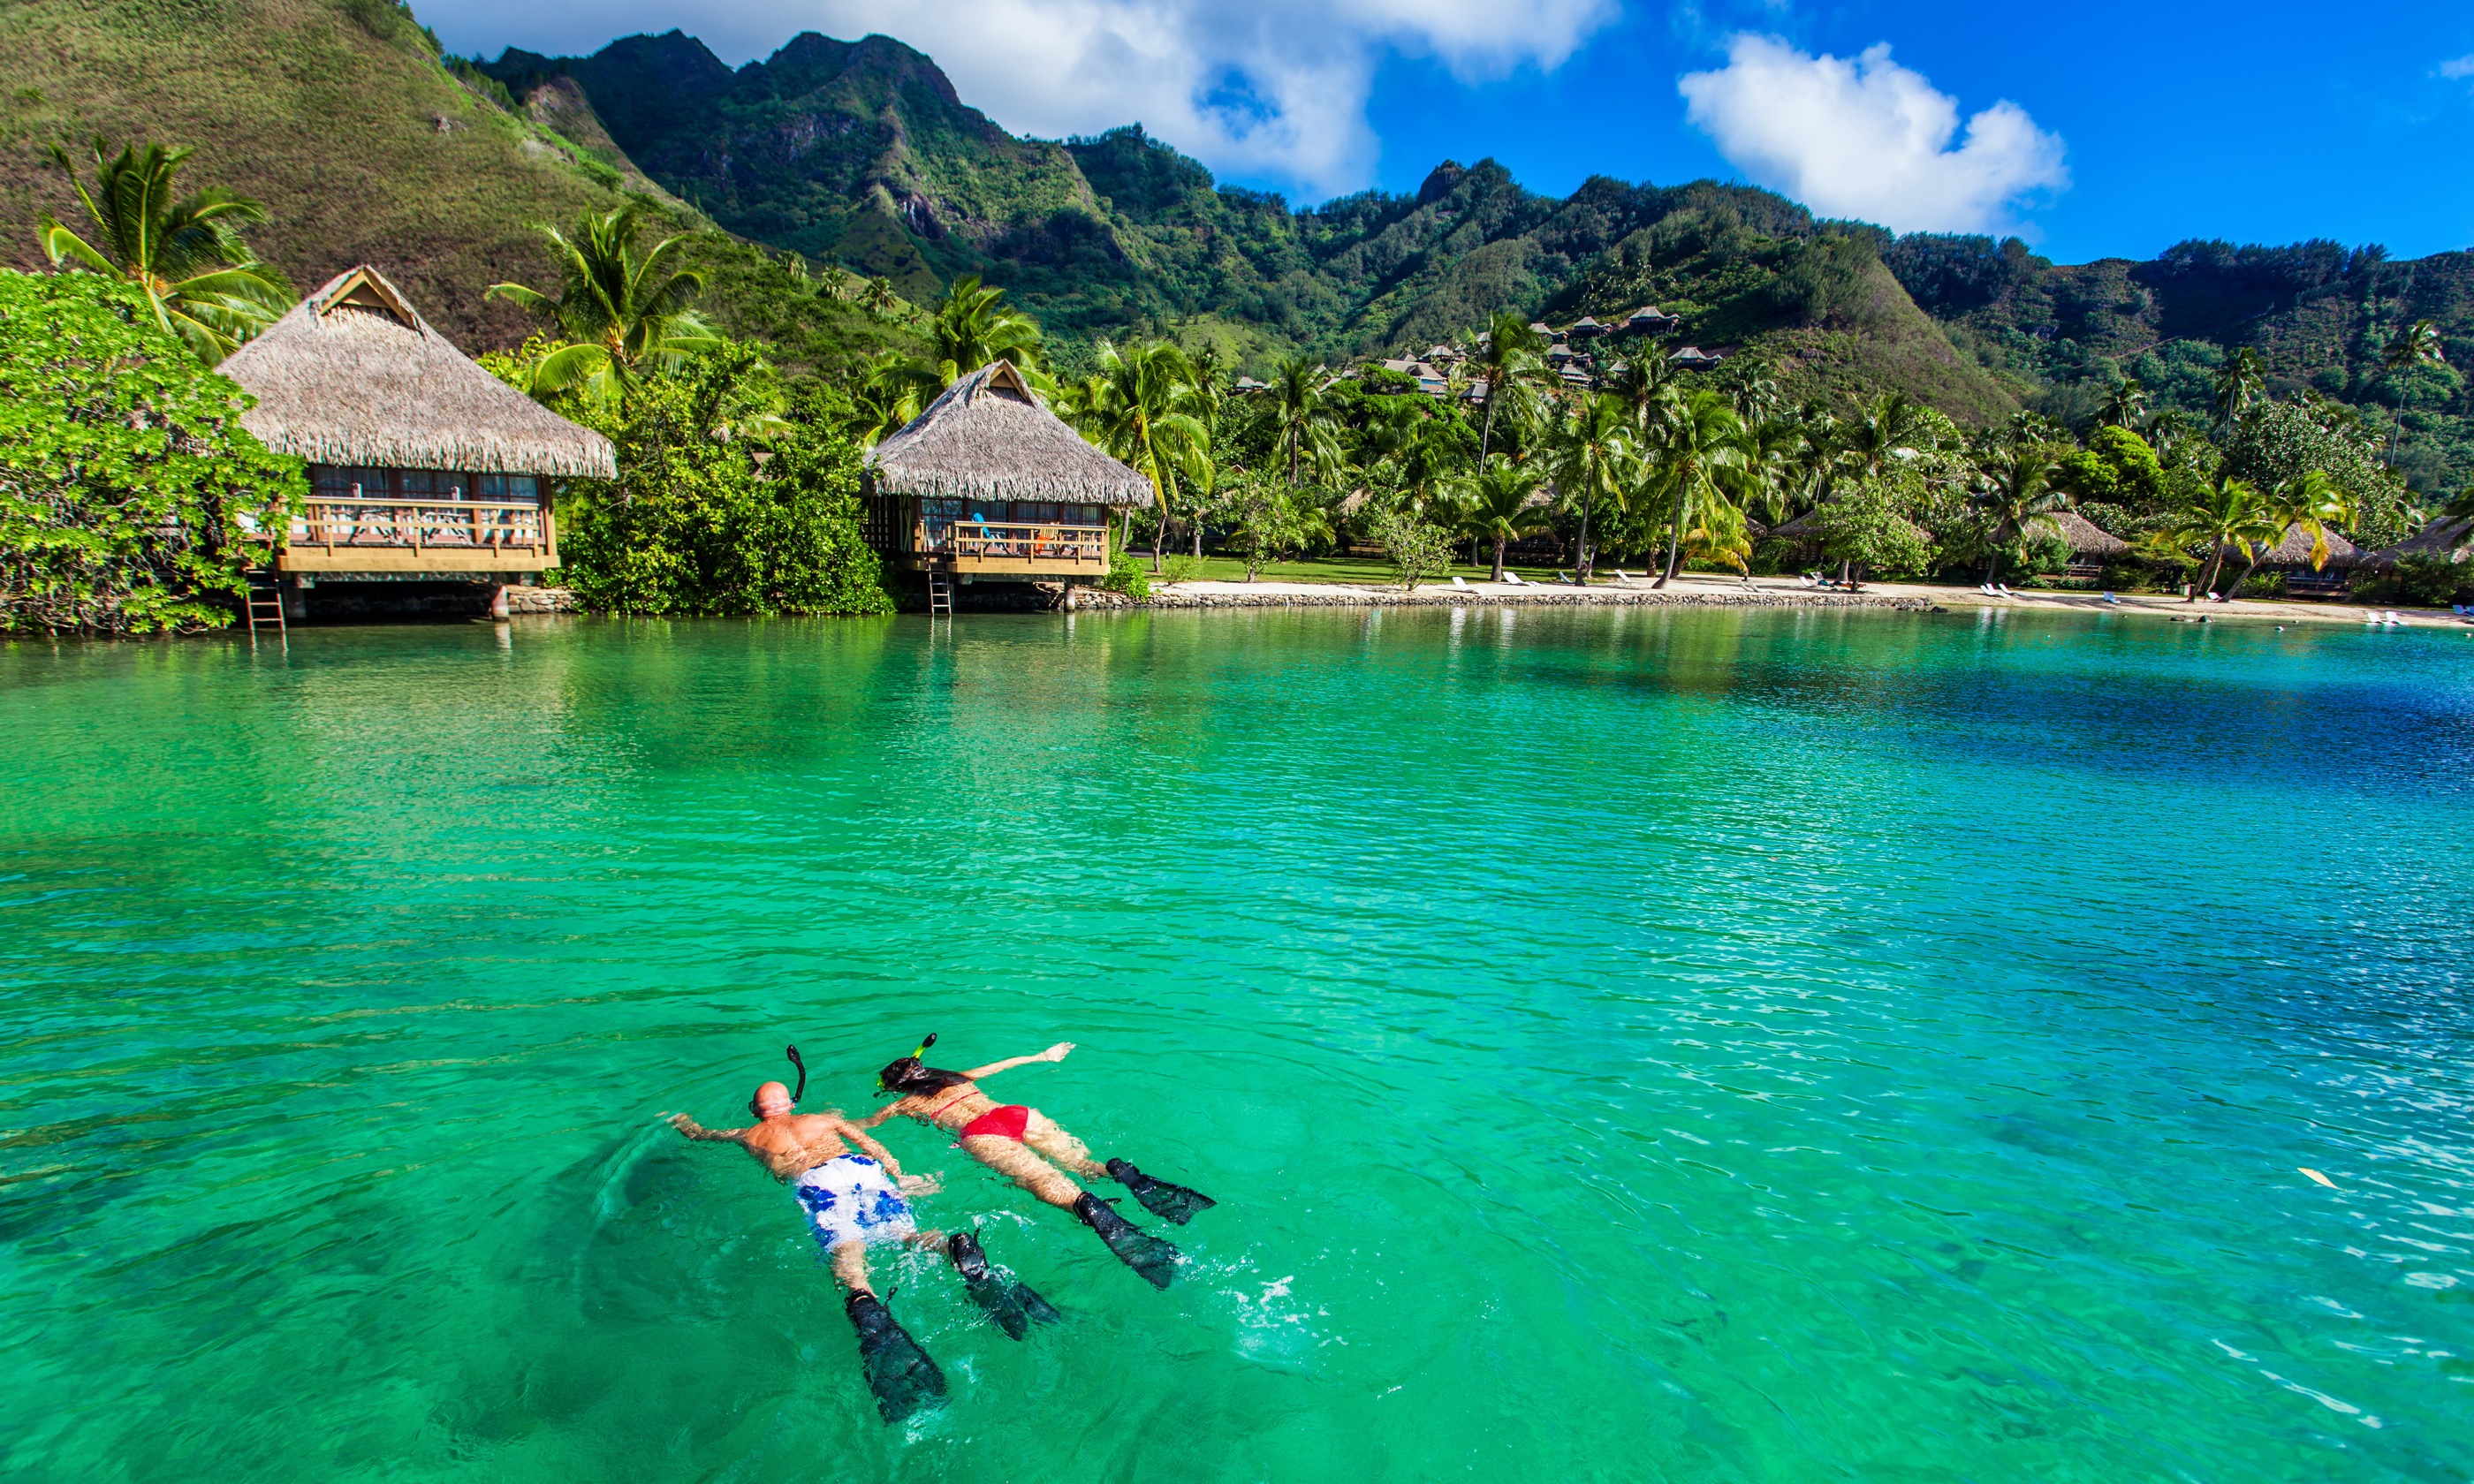 Snorkelling near overwater villas (Shutterstock.com)